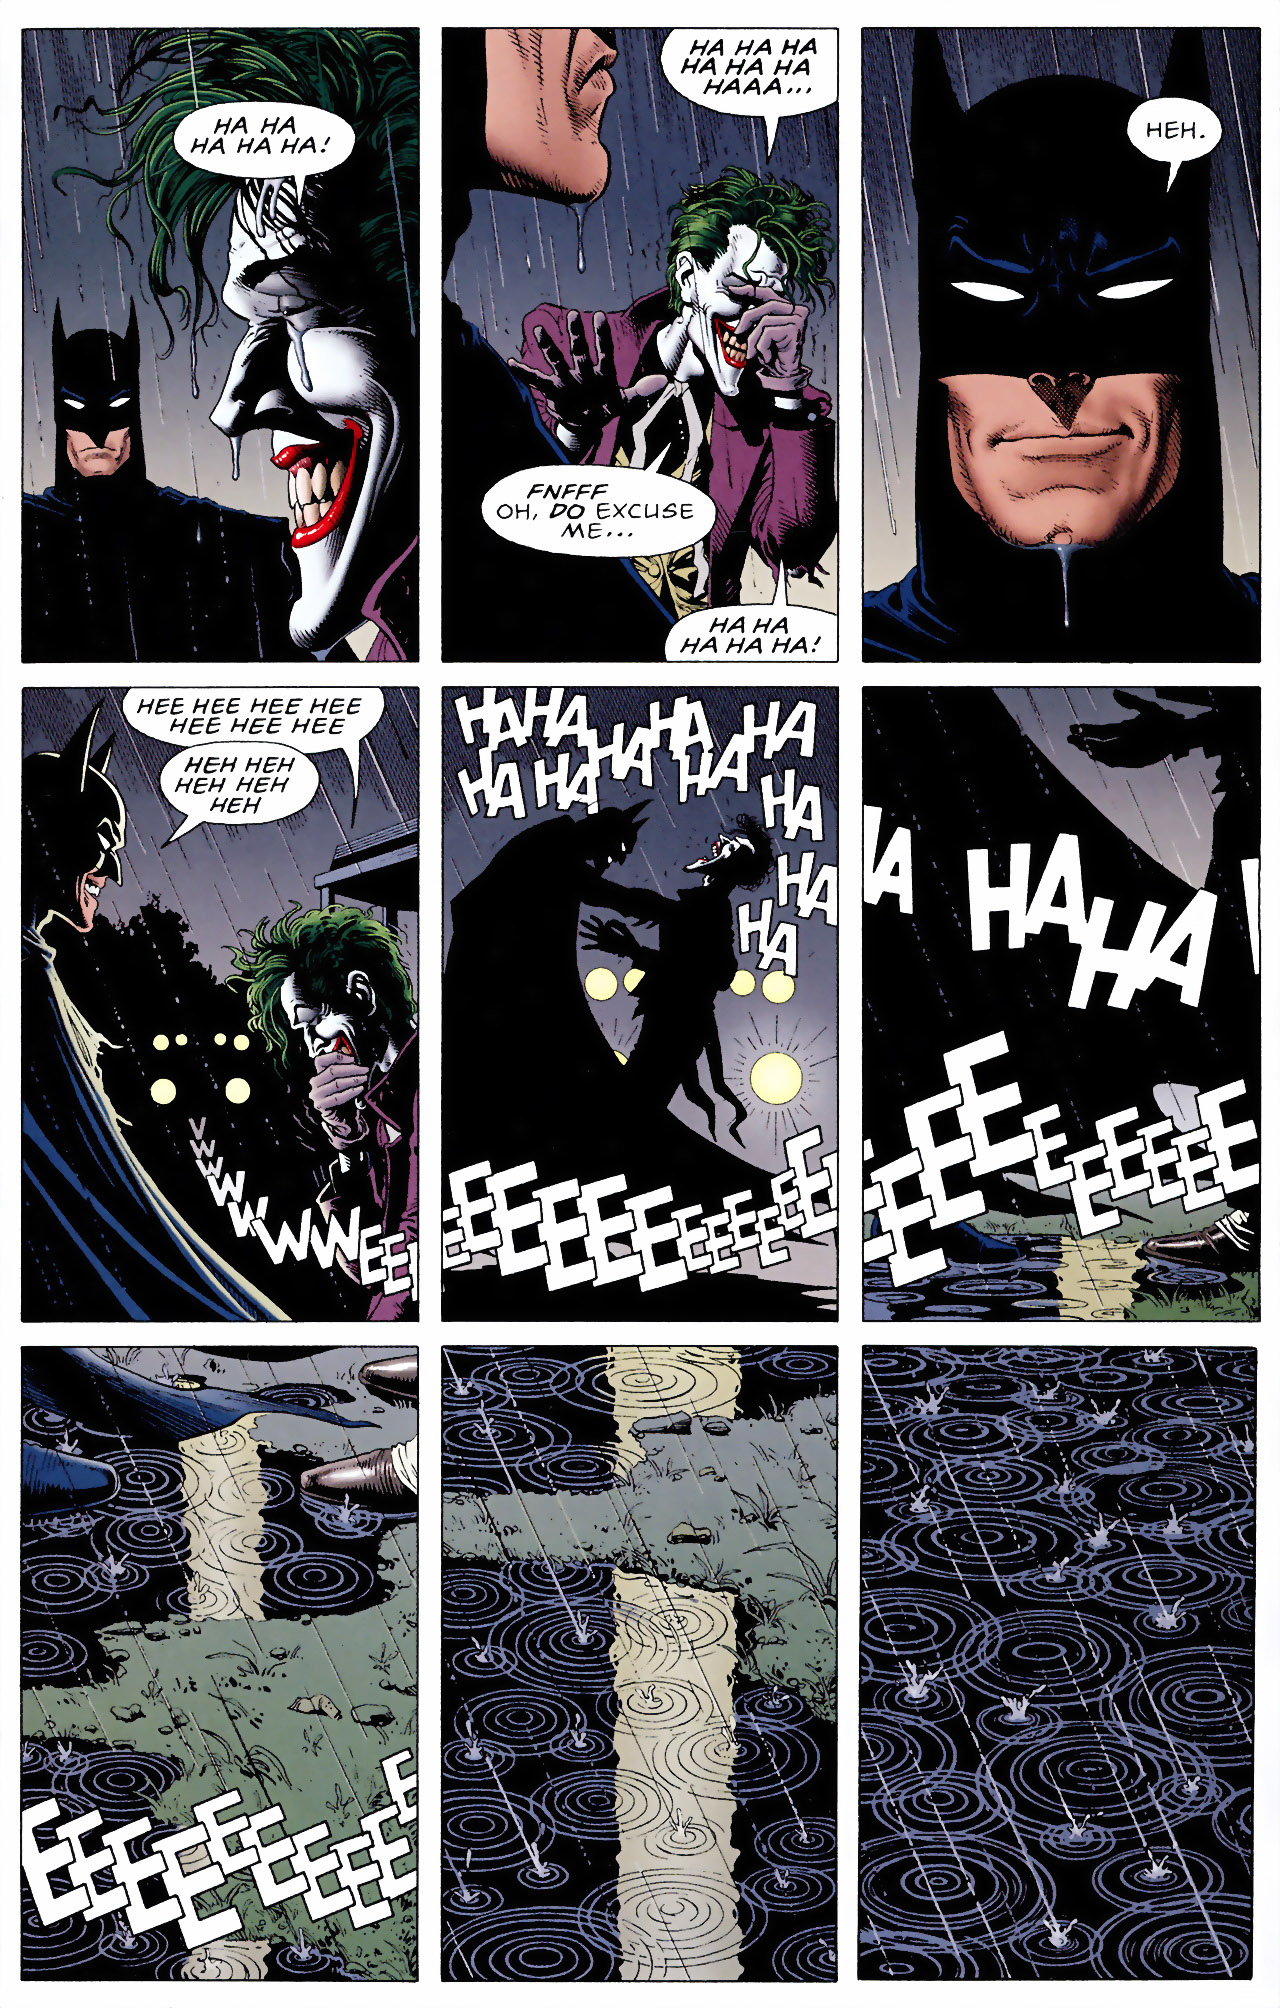 The Killing Joke Batman Laugh